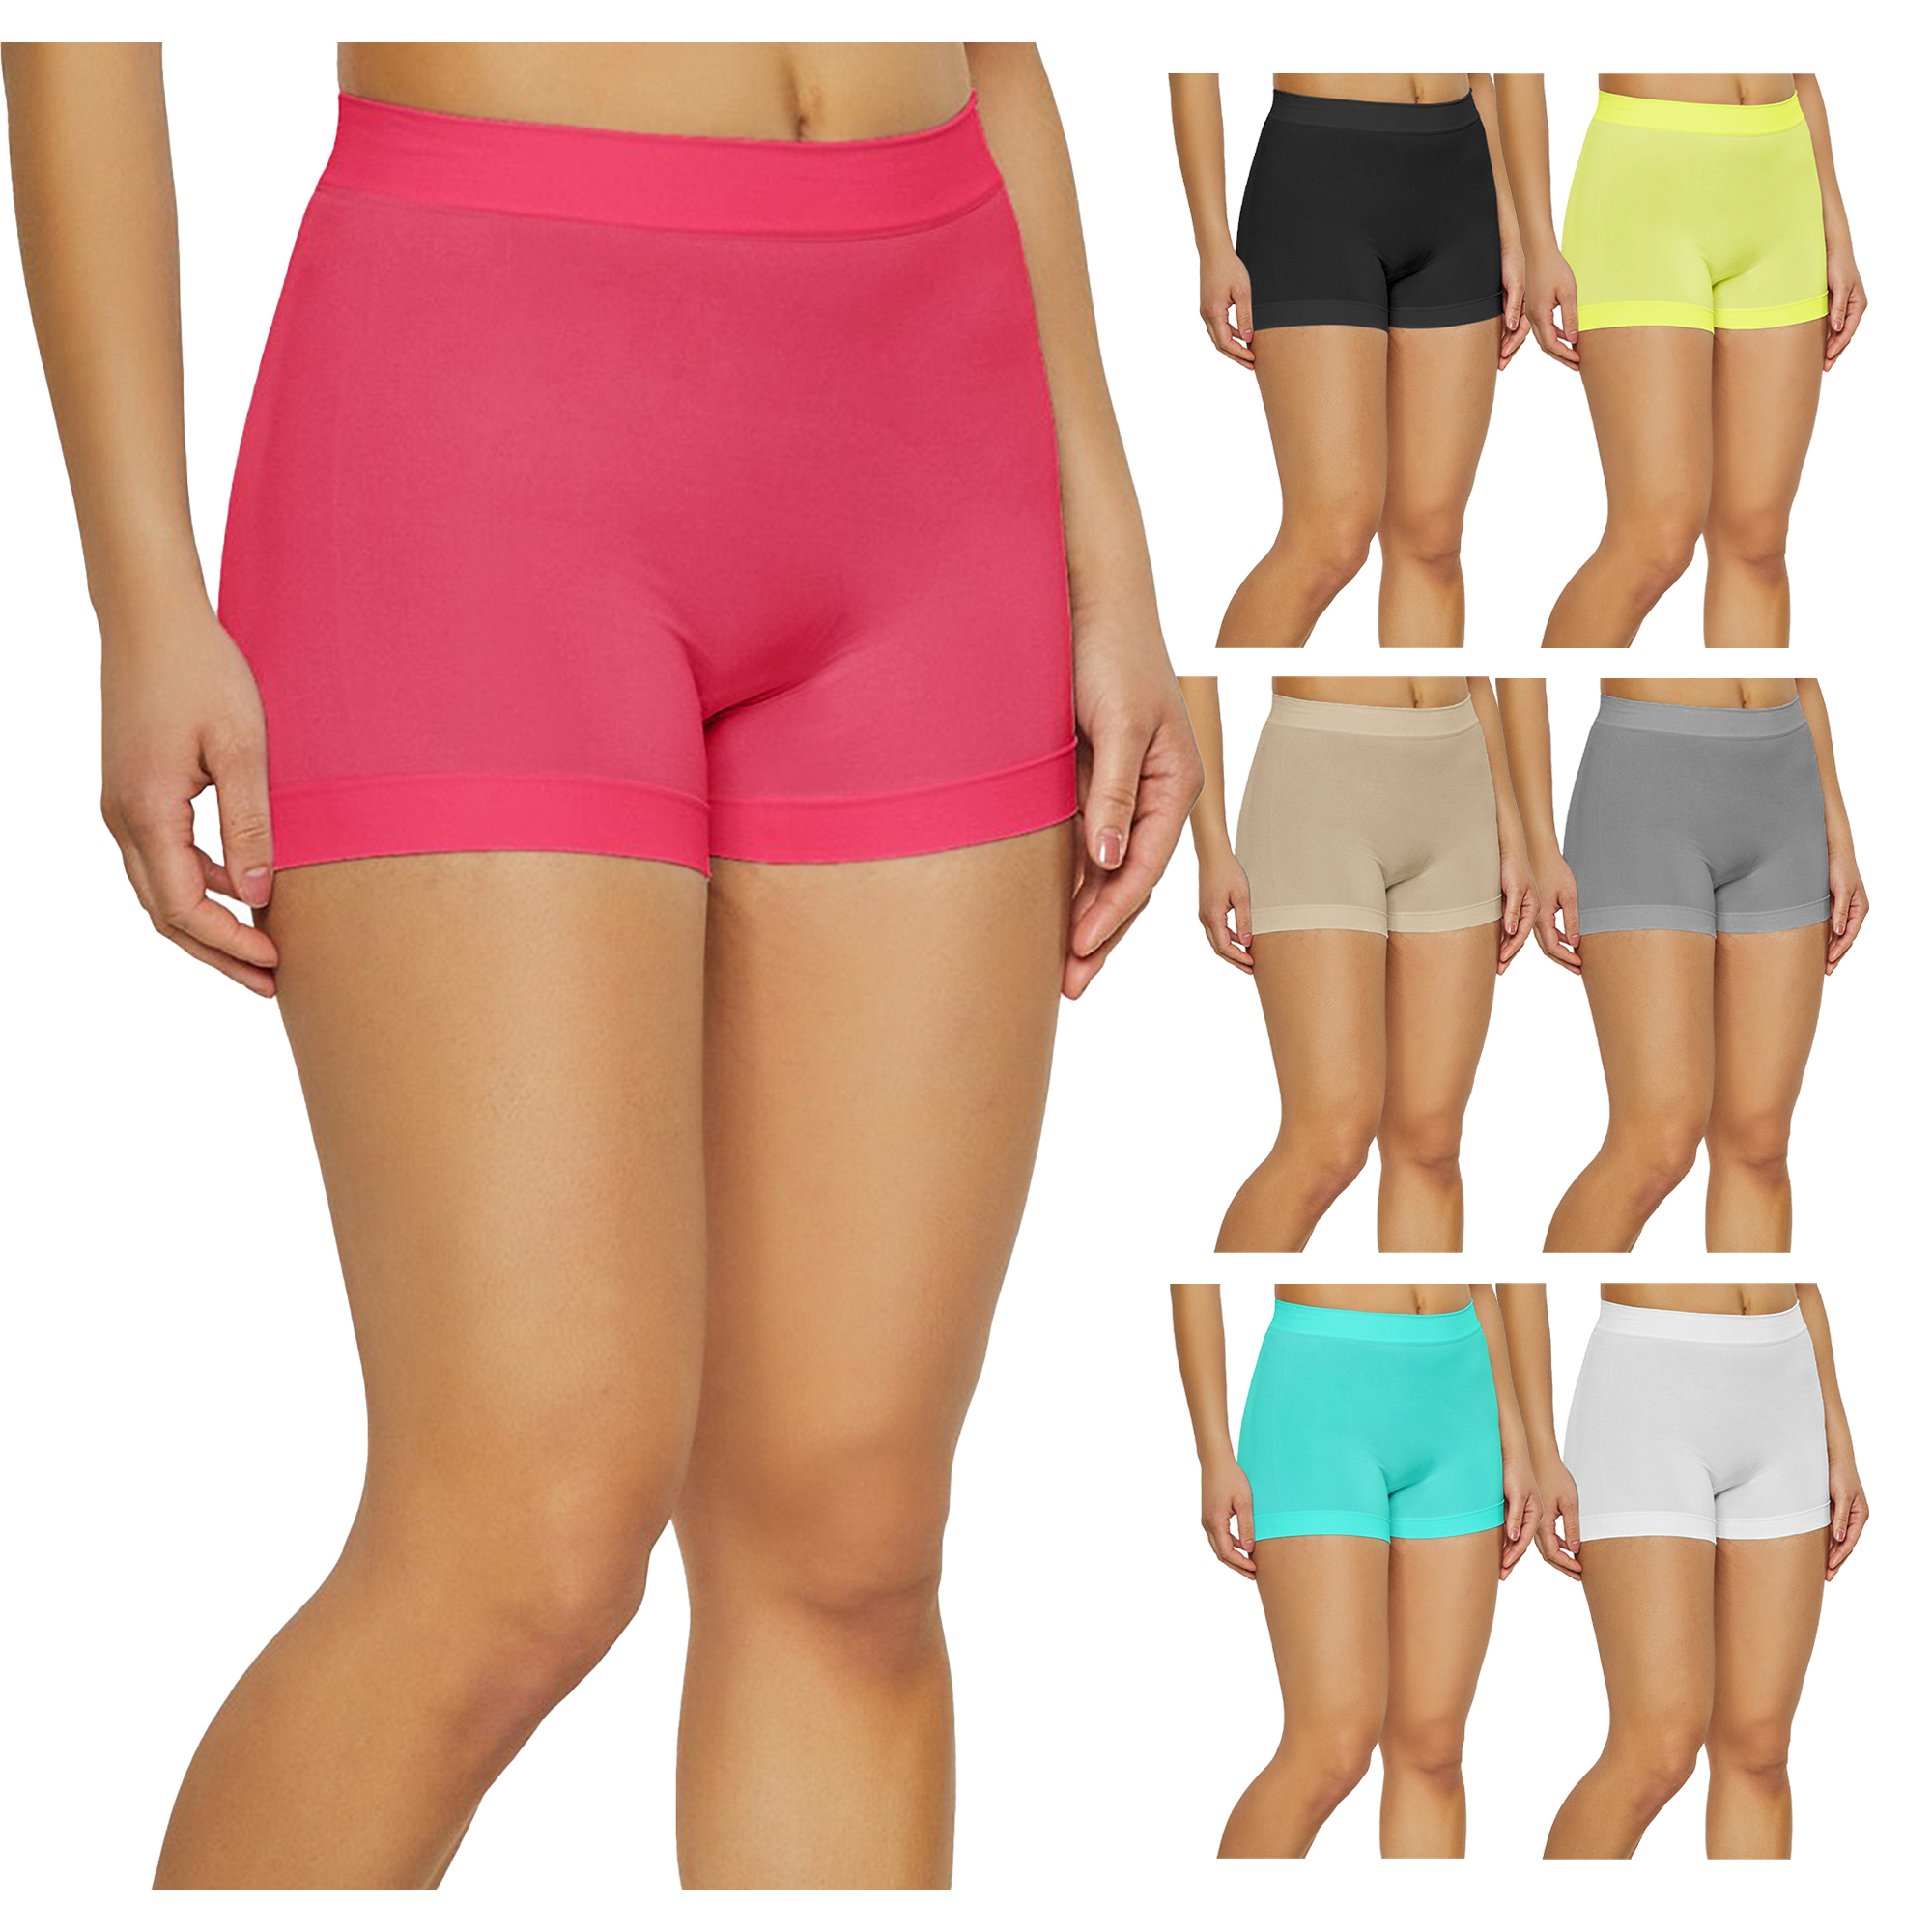 12-Pack Women's High Waisted Biker Bottom Shorts For Yoga Gym Running Ladies Pants - YELLOW, S